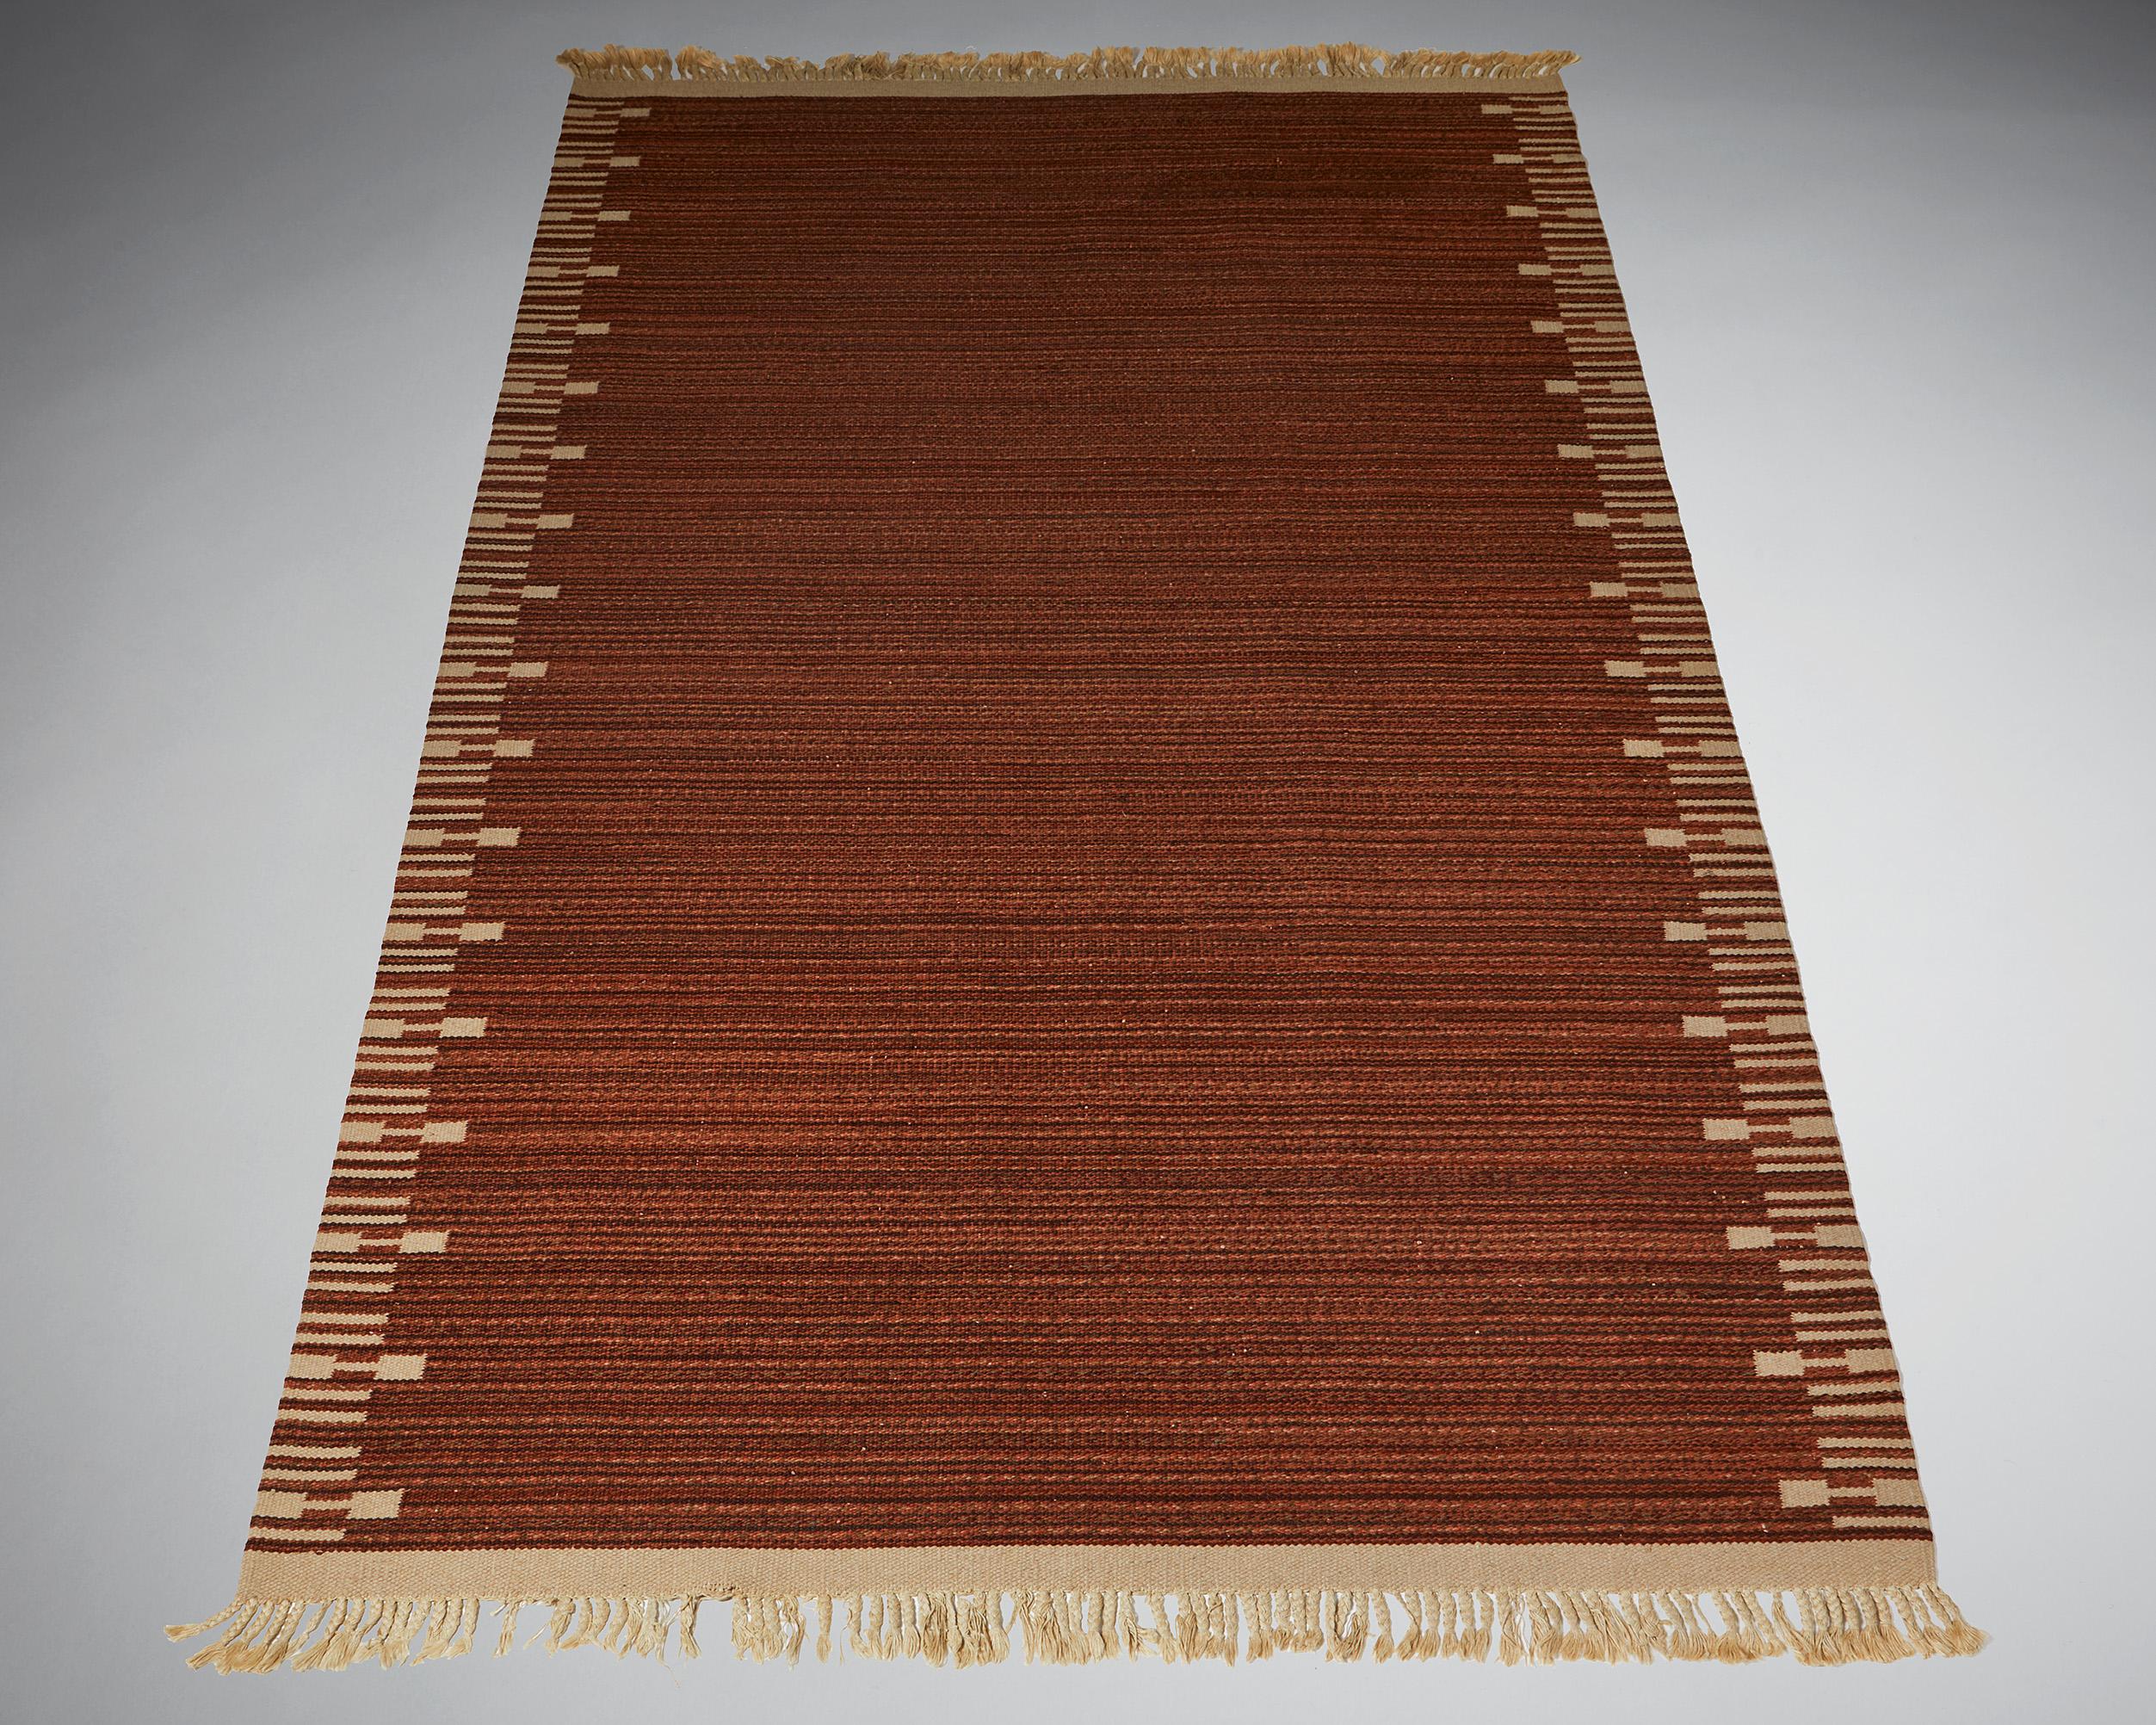 Handwoven flat weave in wool.

Measures: L: 396 cm / 13’
W: 191 cm / 6’ 3”.